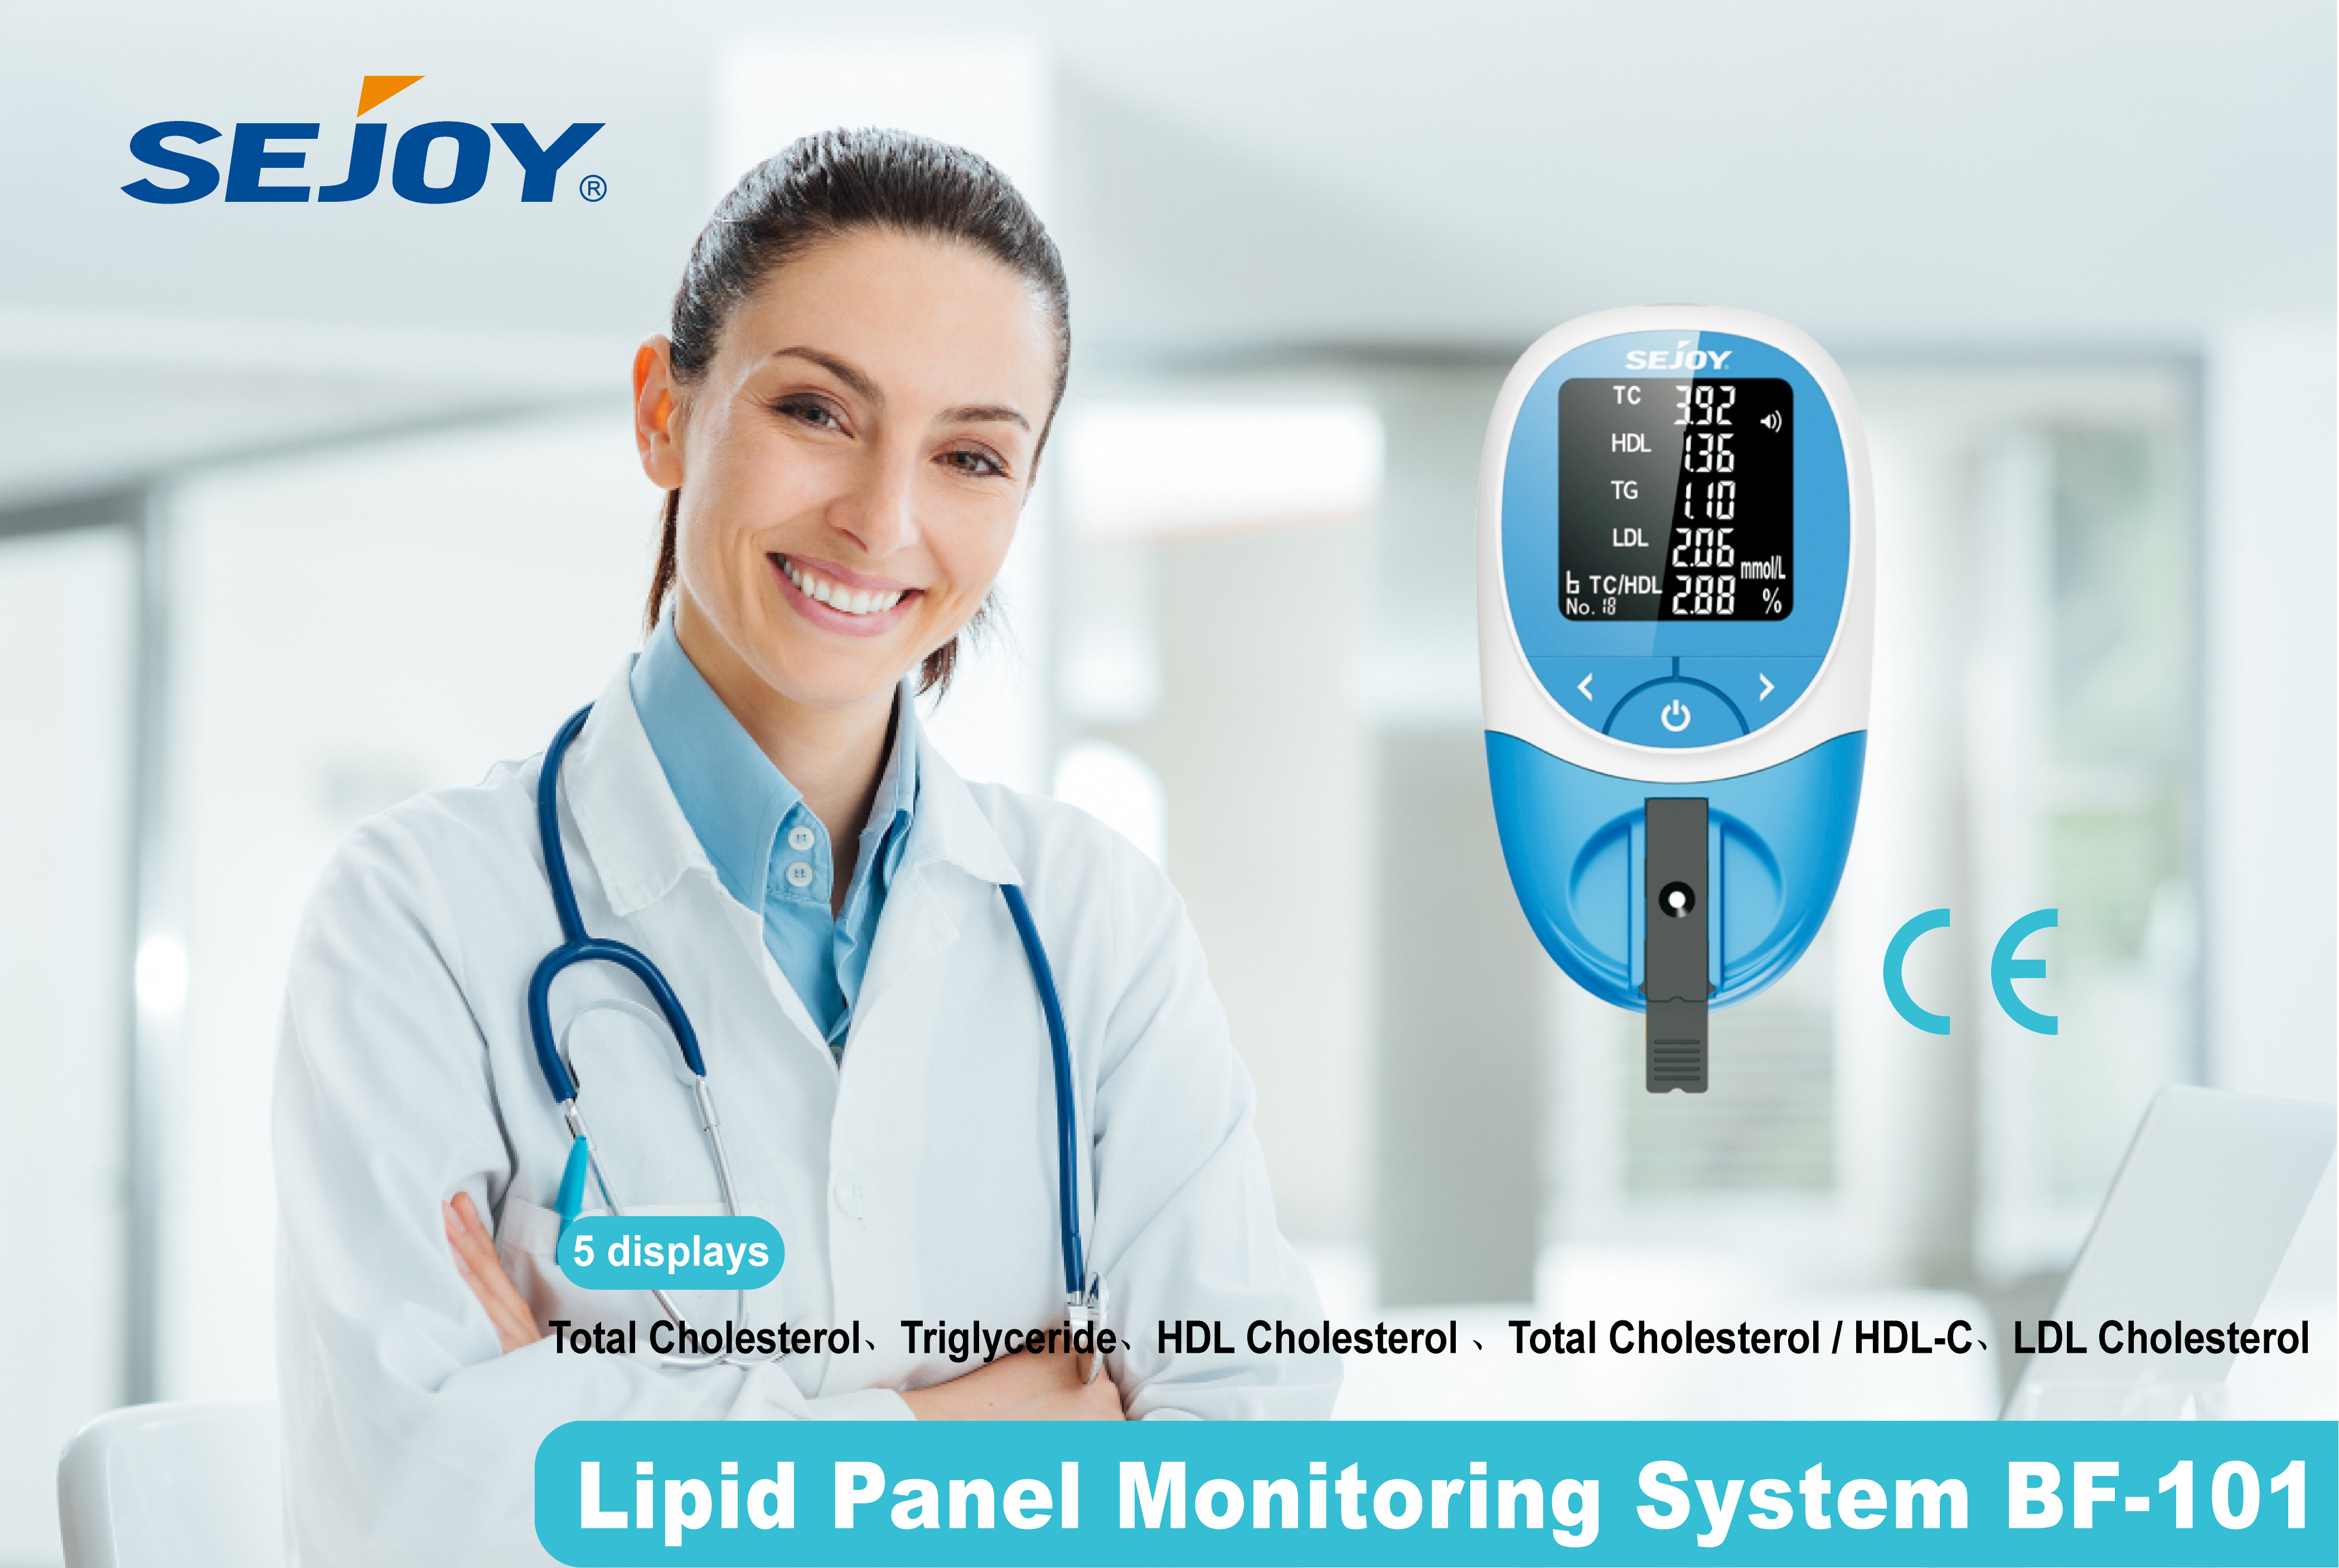 https://www.sejoy.com/lipid-panel-monitoring-system/